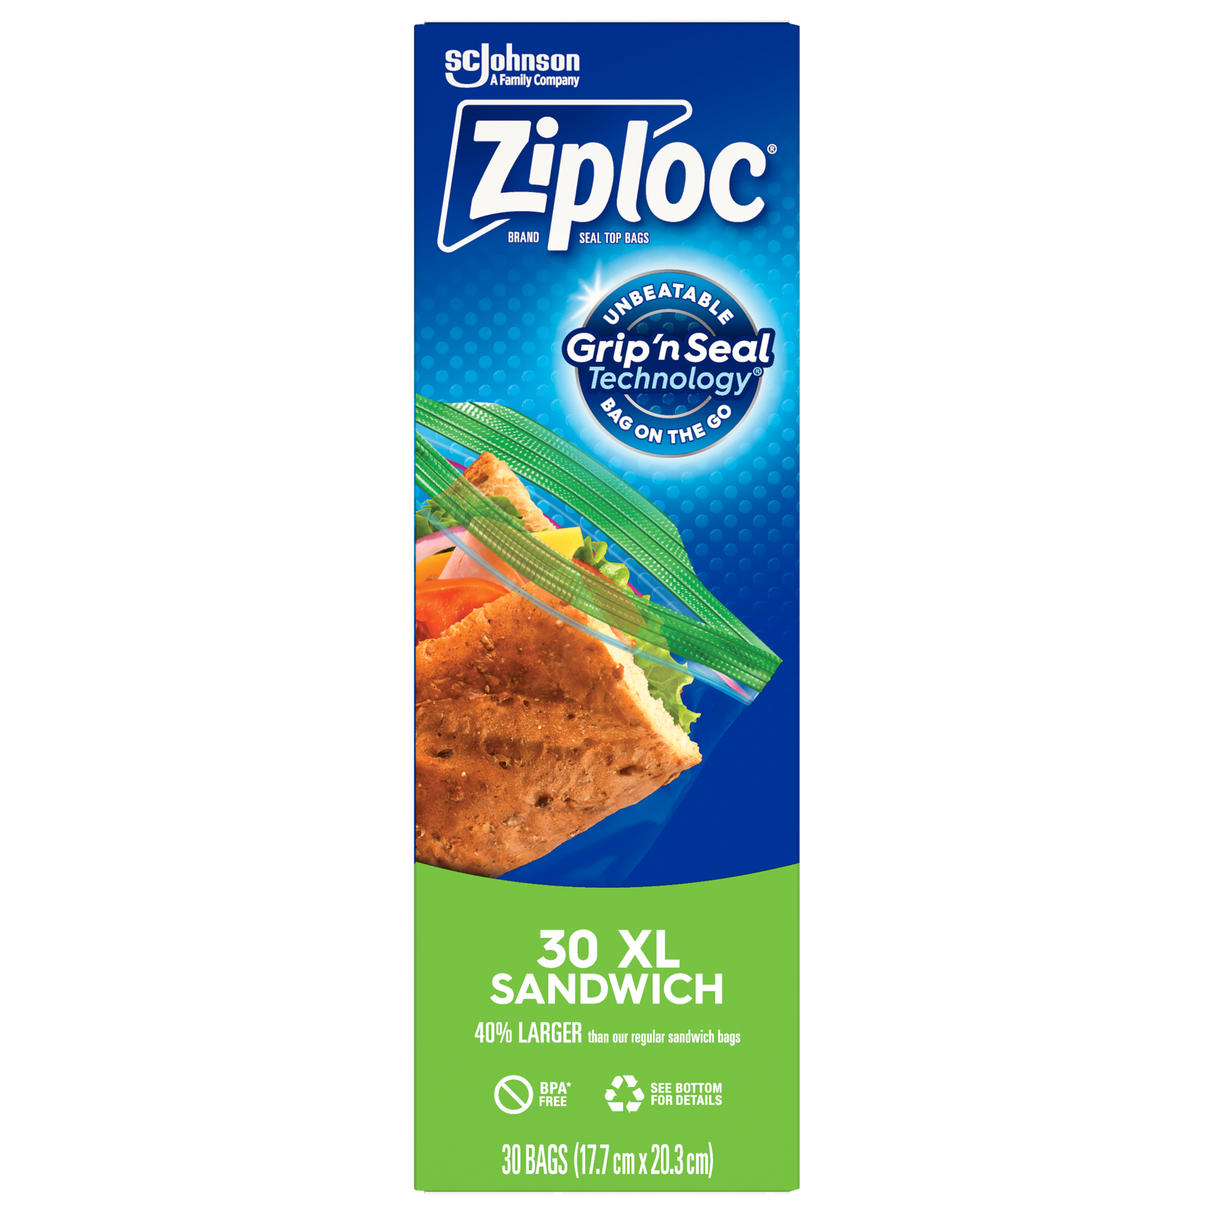 Ziploc Sandwich Bags XL 30 Pack